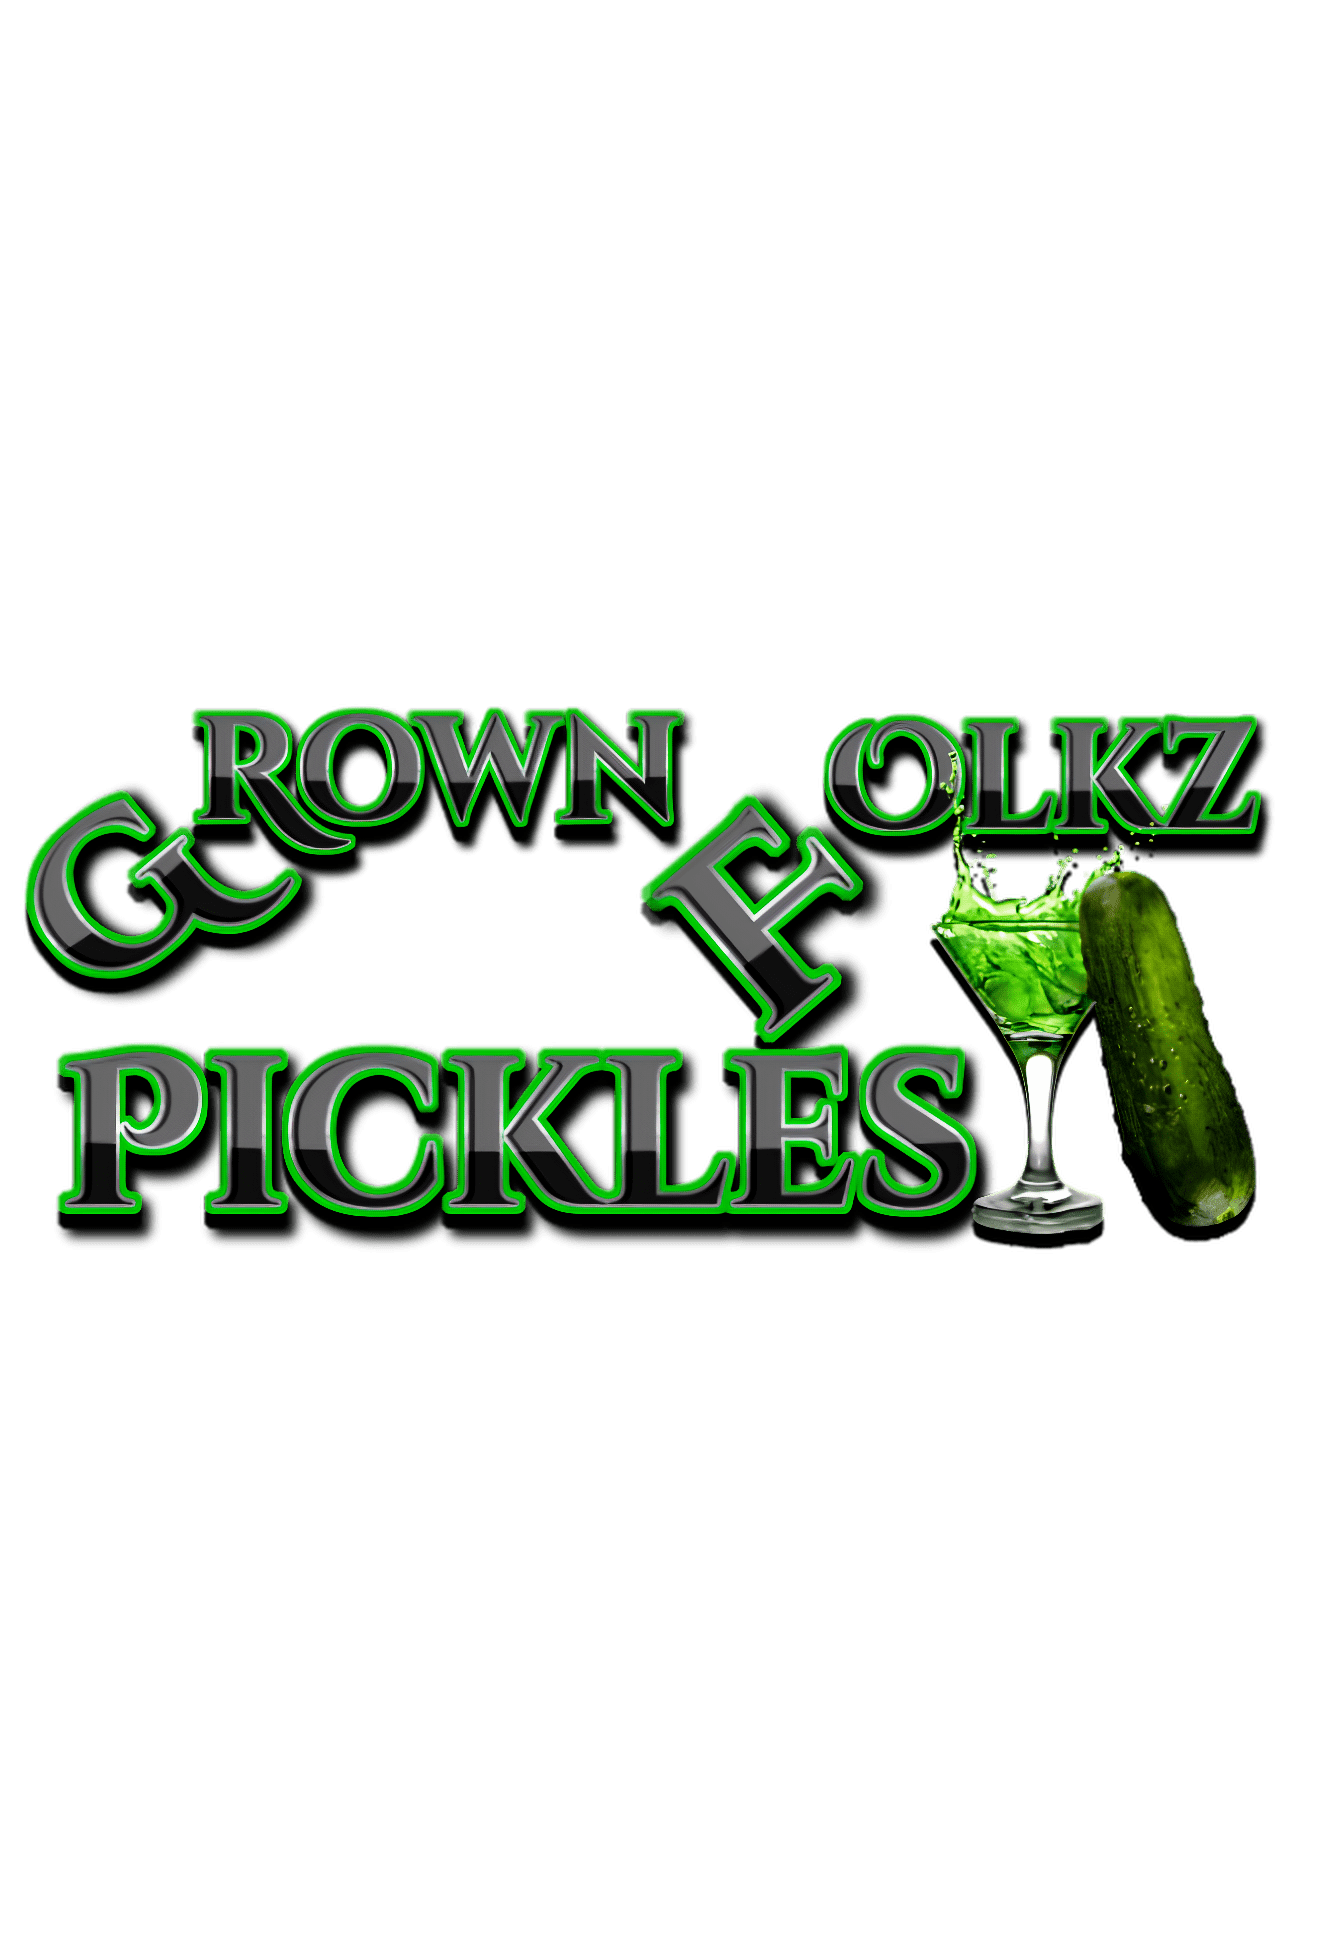 Grown Fokez Pickles!